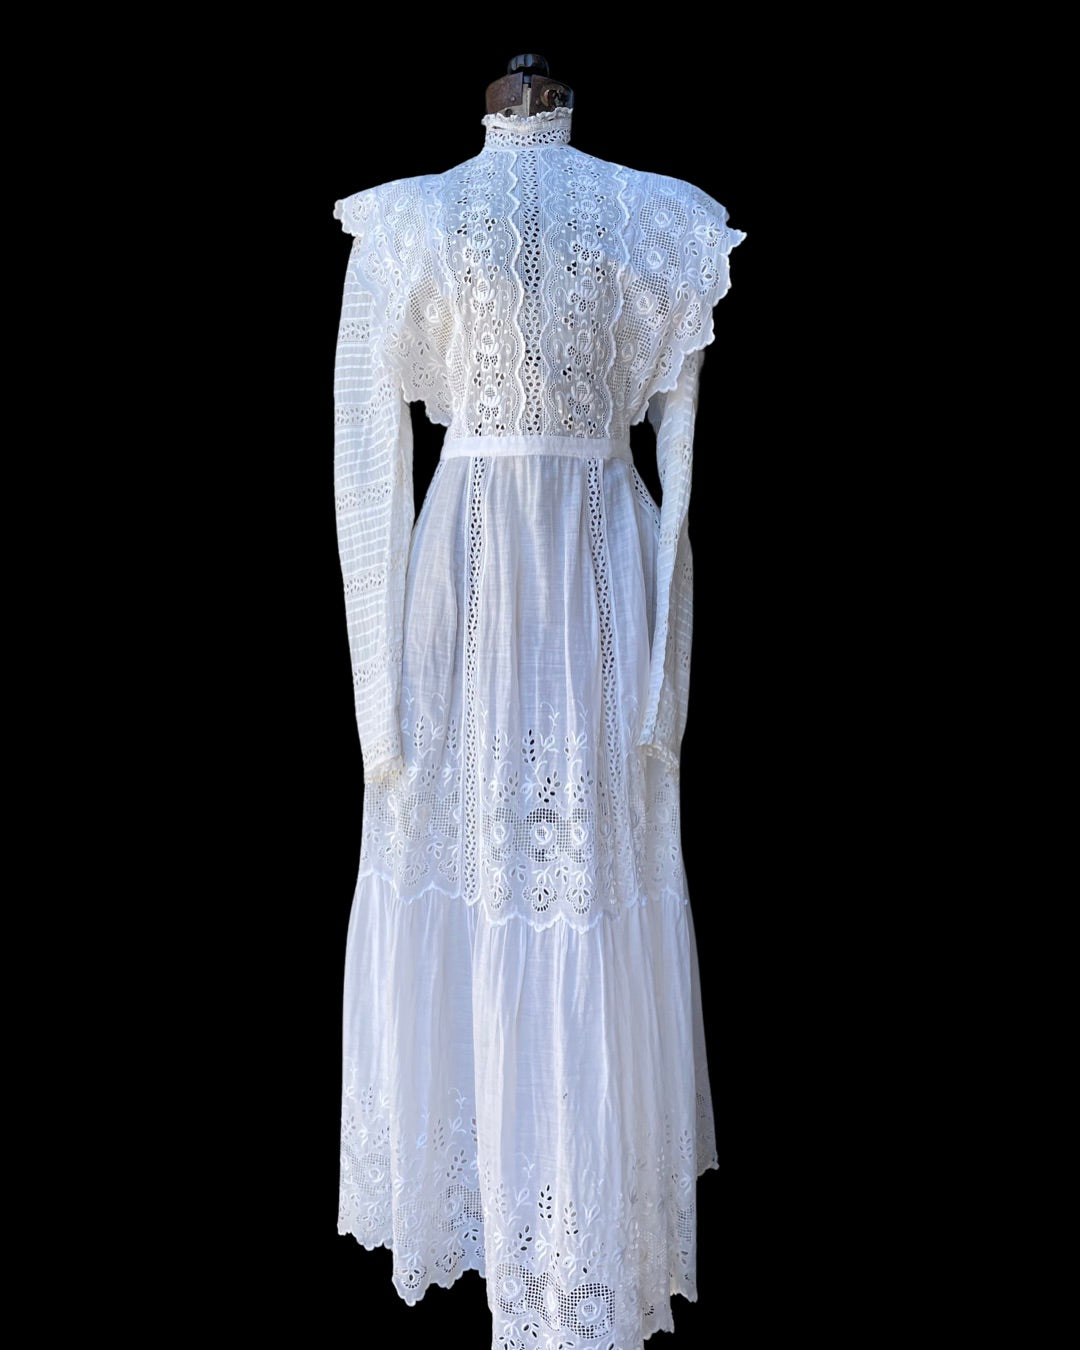 Victorian High Neck Cotton Lawn Lace Inset Dress